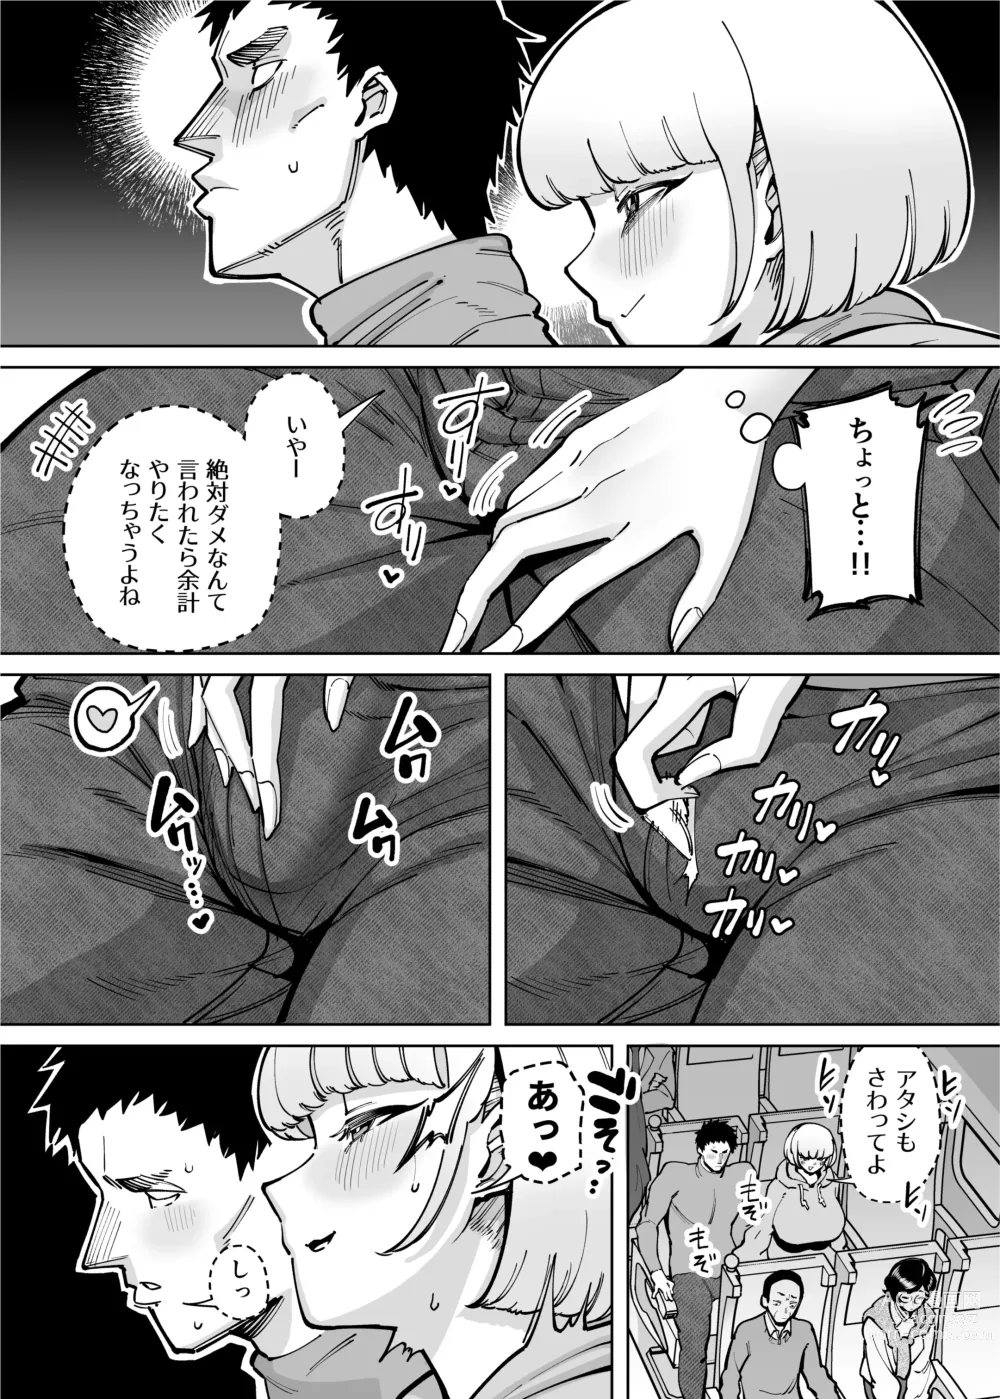 Page 4 of doujinshi ハメられ大好きビッチちゃん スケベ温泉旅行編〜そうだちんぽをハメよう〜